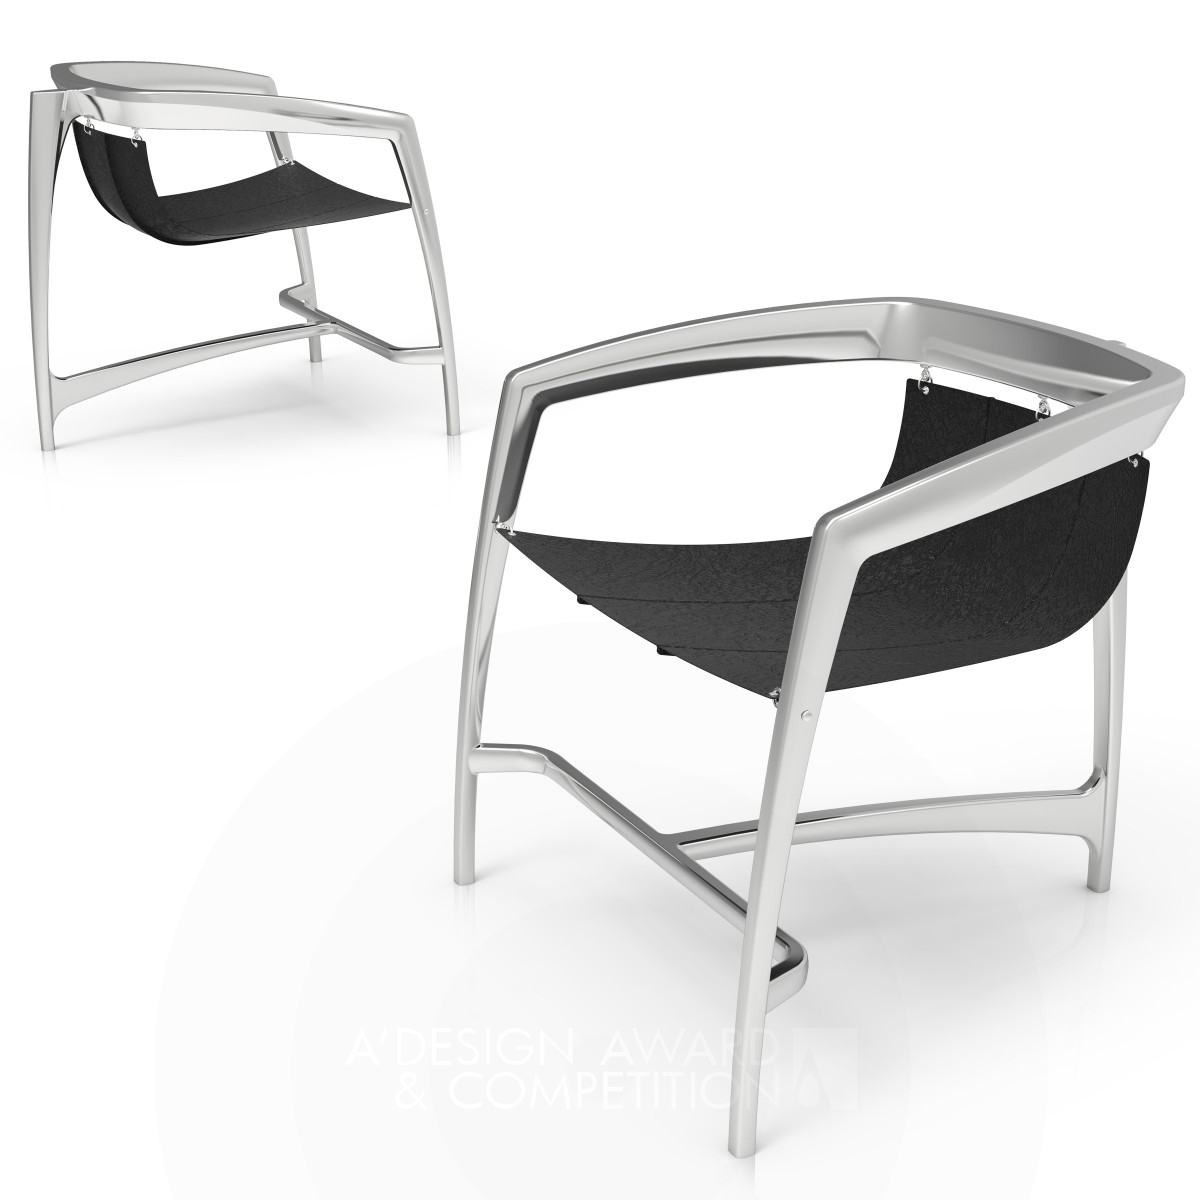 WEI Chair Abstract shapes by Wei Jingye Iron Furniture Design Award Winner 2018 